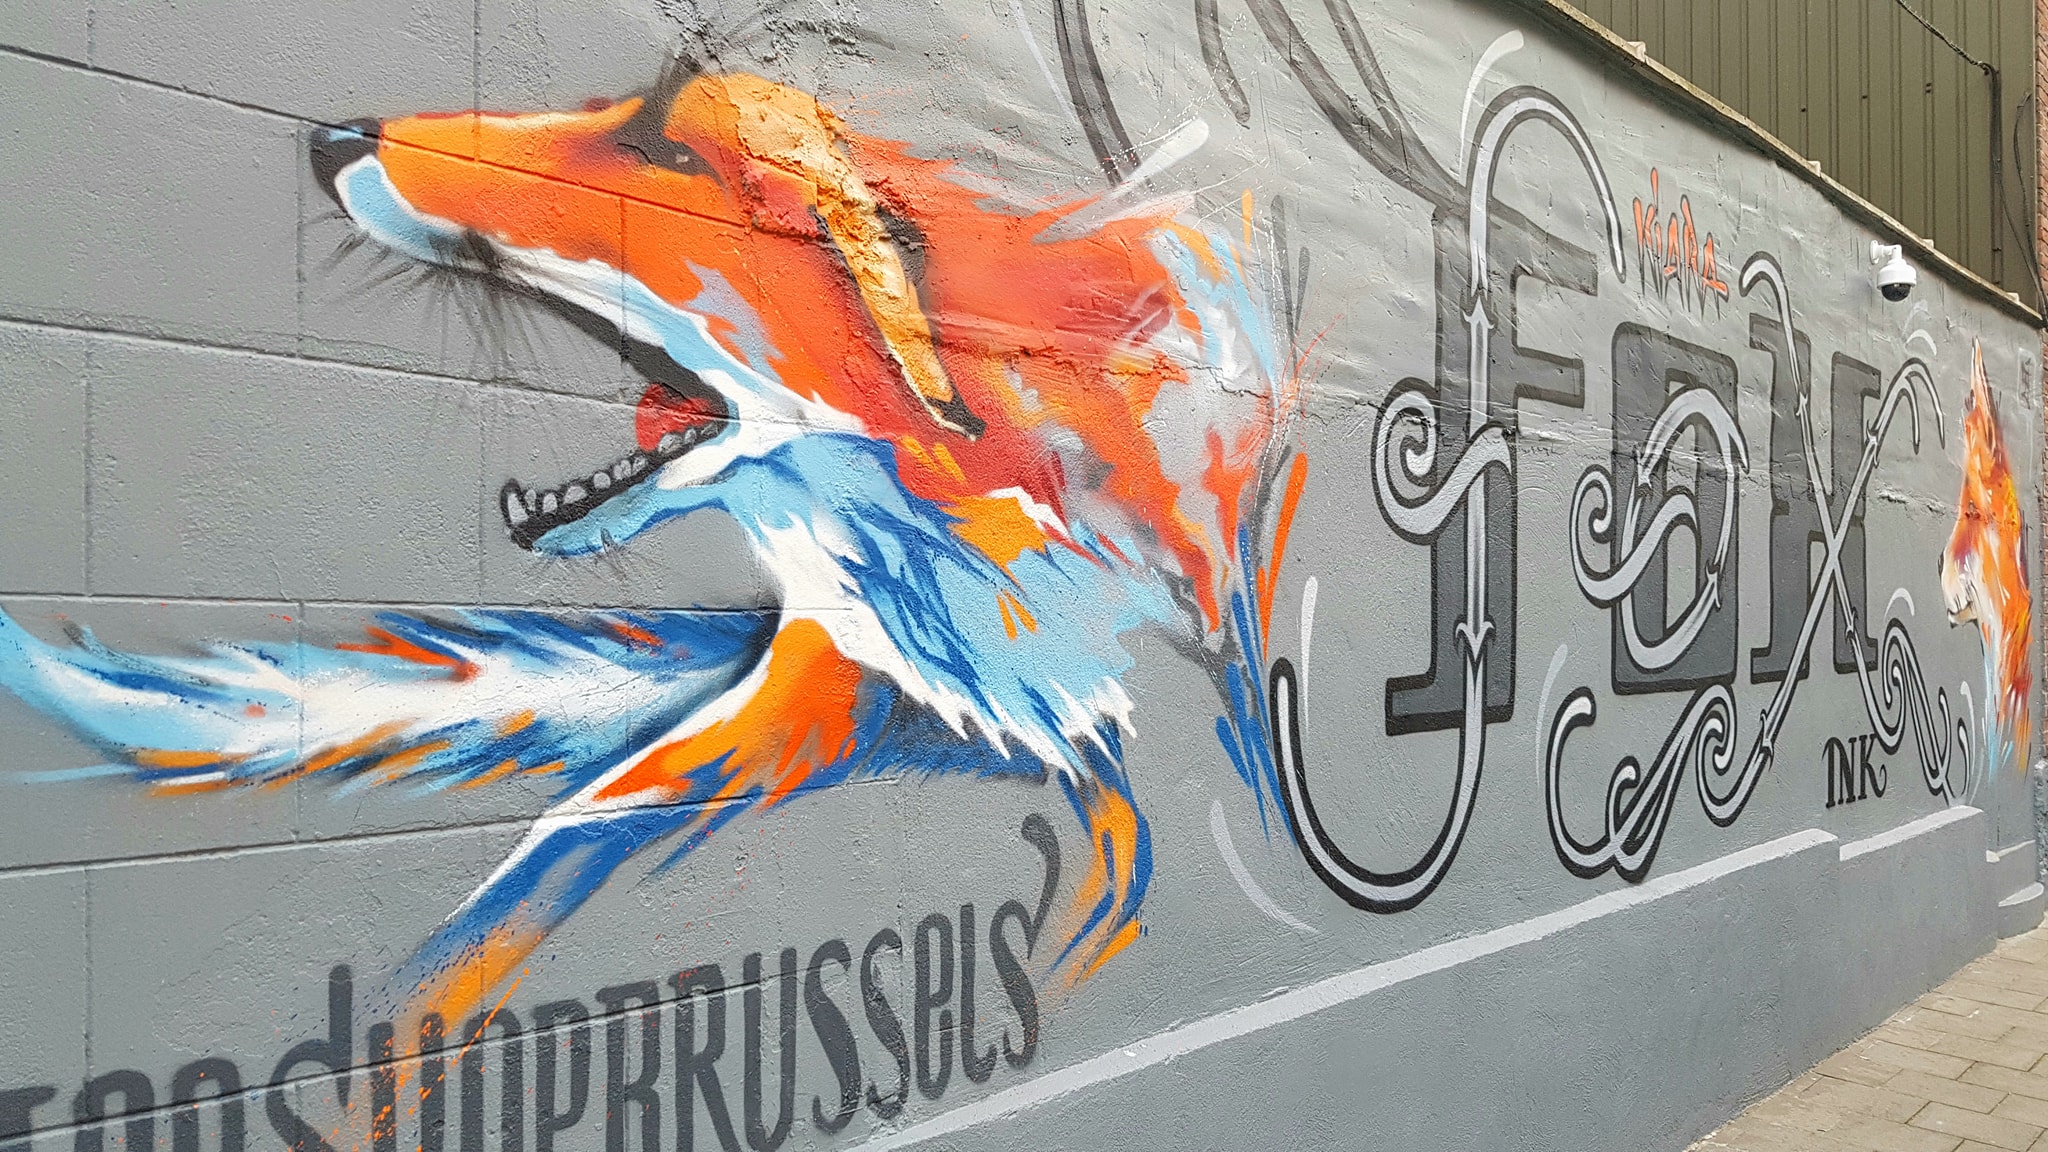 https://propaganza.be/nl/wp-content/uploads/sites/3/2019/04/Orkez-propaganza-urban-artist-graffiti-graff-street-art-spray-painting-belgique-2.jpg